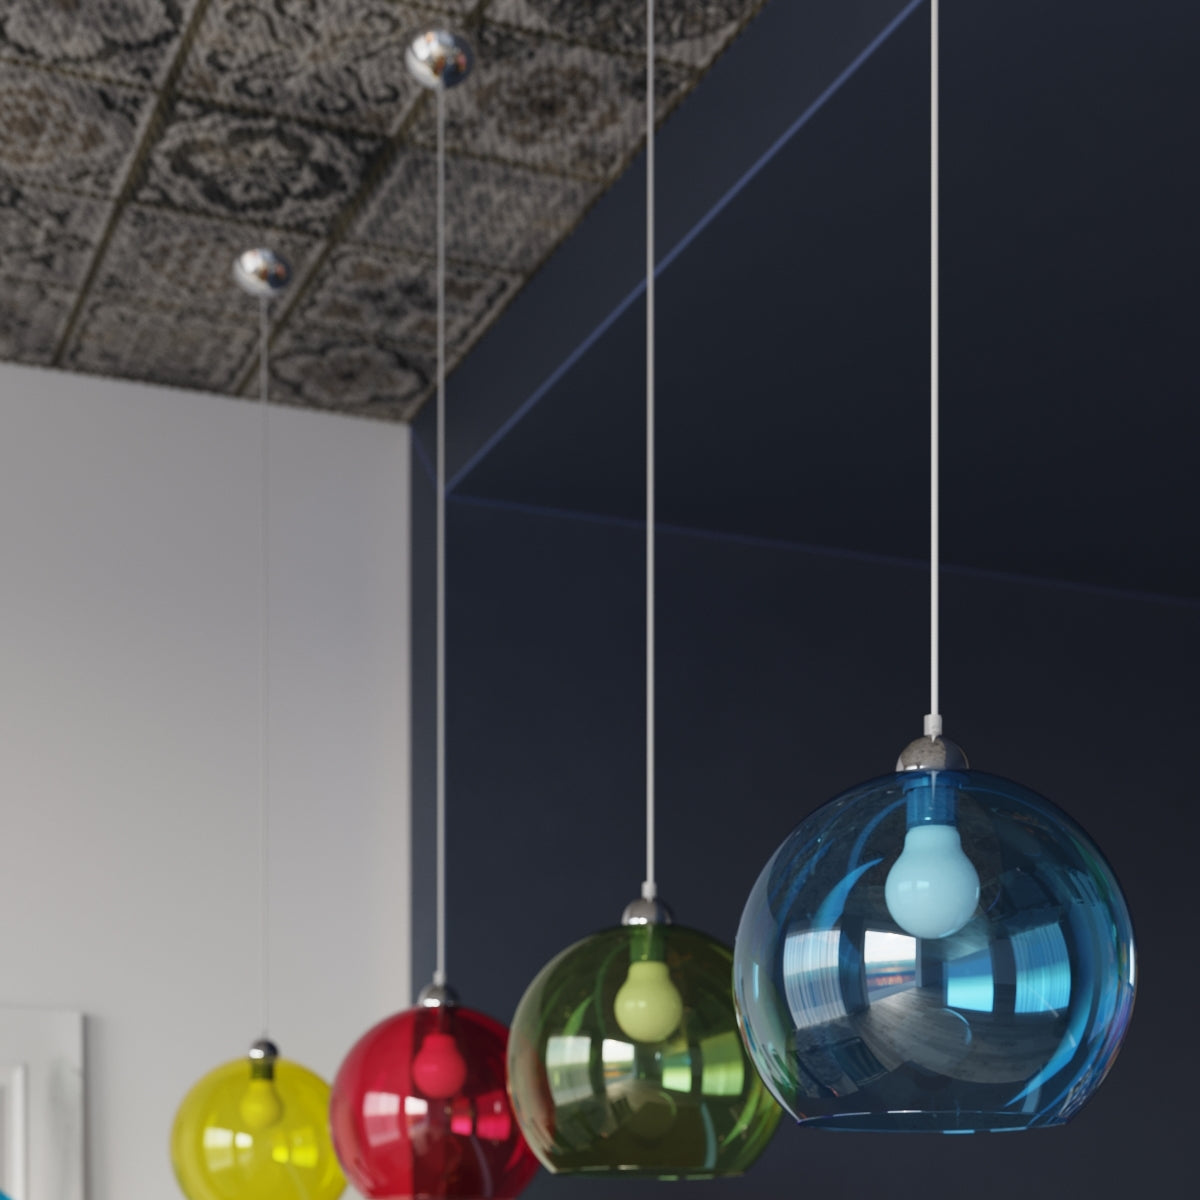 hanglamp-ball-transparant